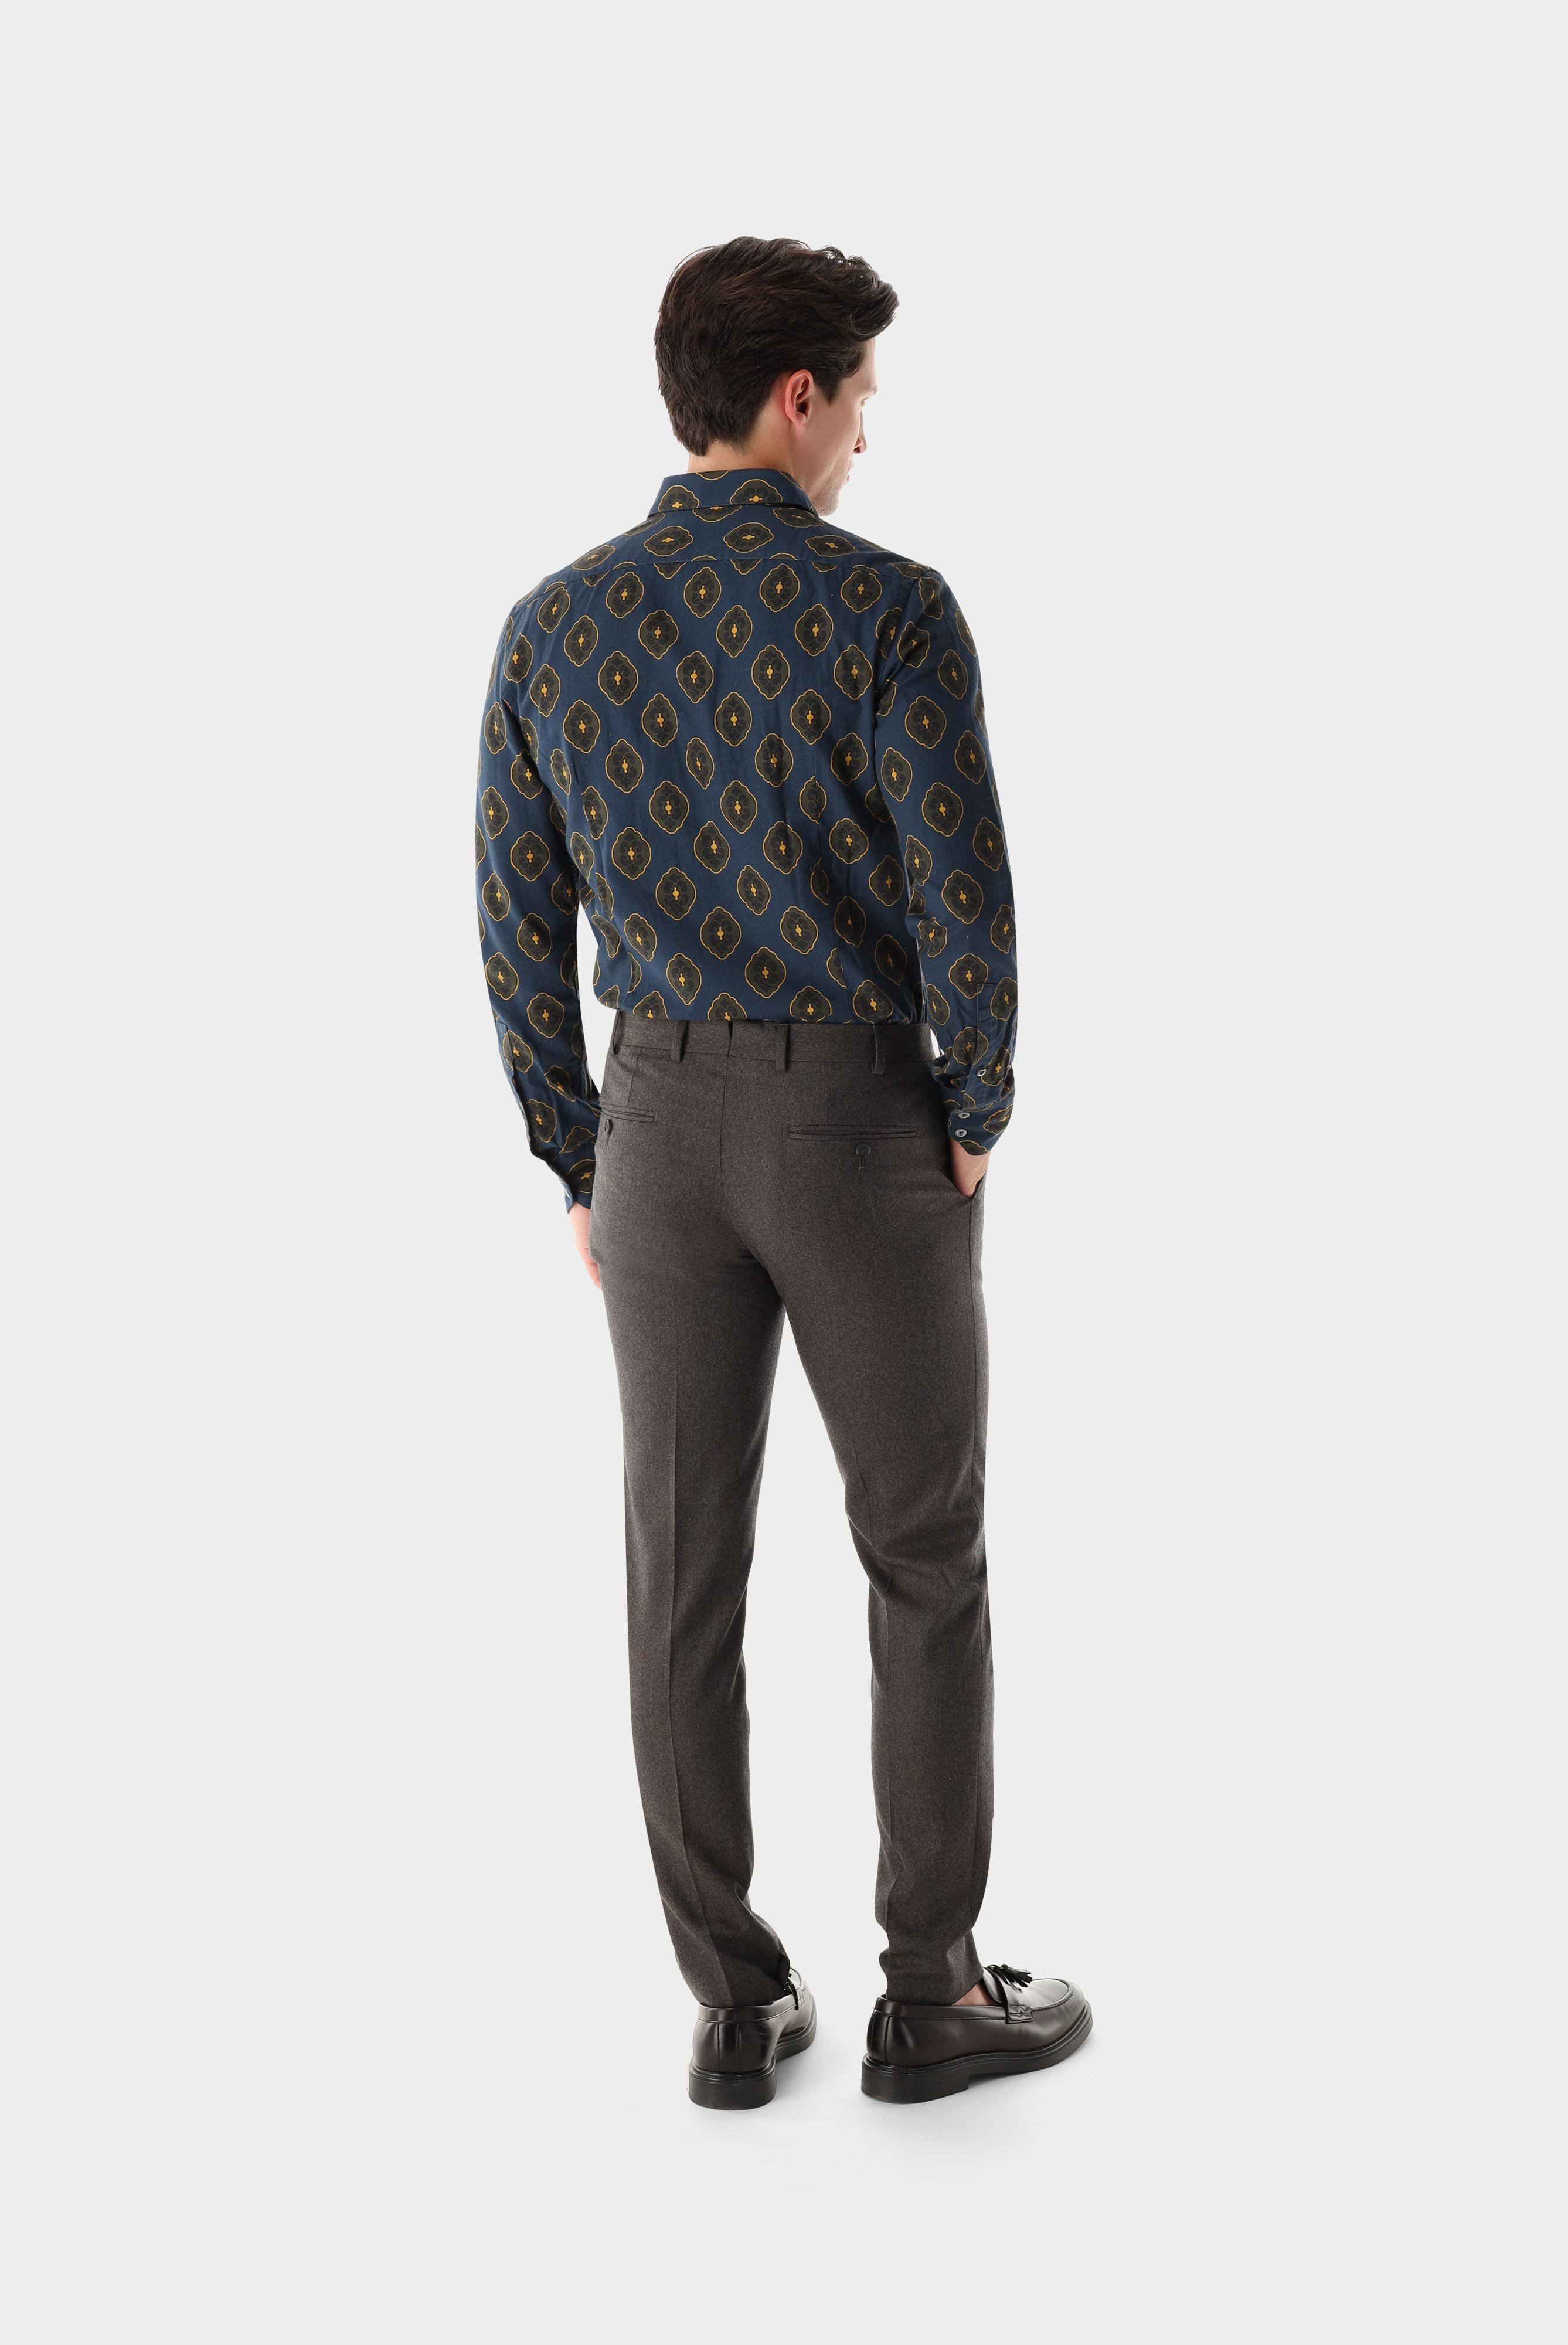 Casual Hemden+Vintage Twill Hemd Tailor Fit+20.2086.MB.172031.789.39